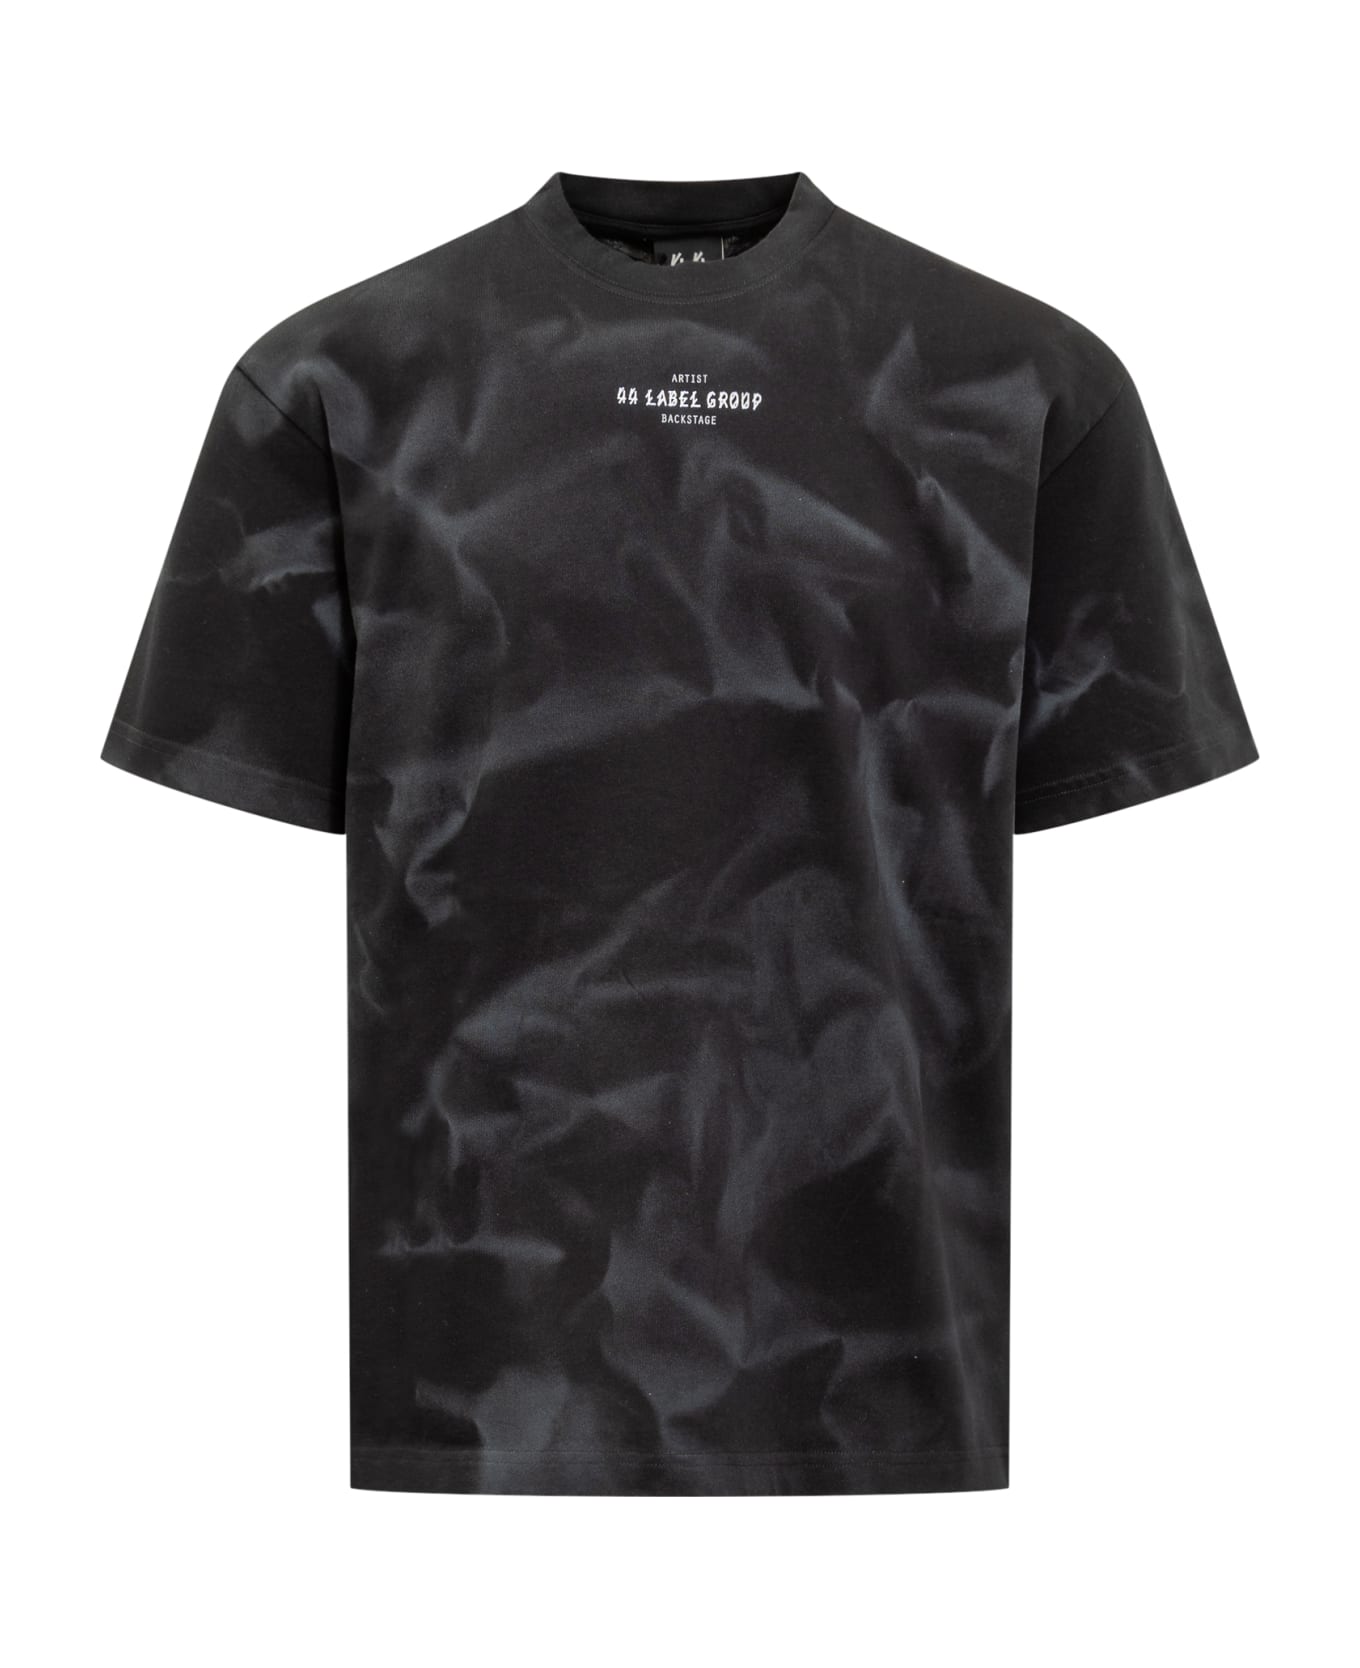 44 Label Group T-shirt With Smoke Effect - BLACK-SMOKE EFFECT